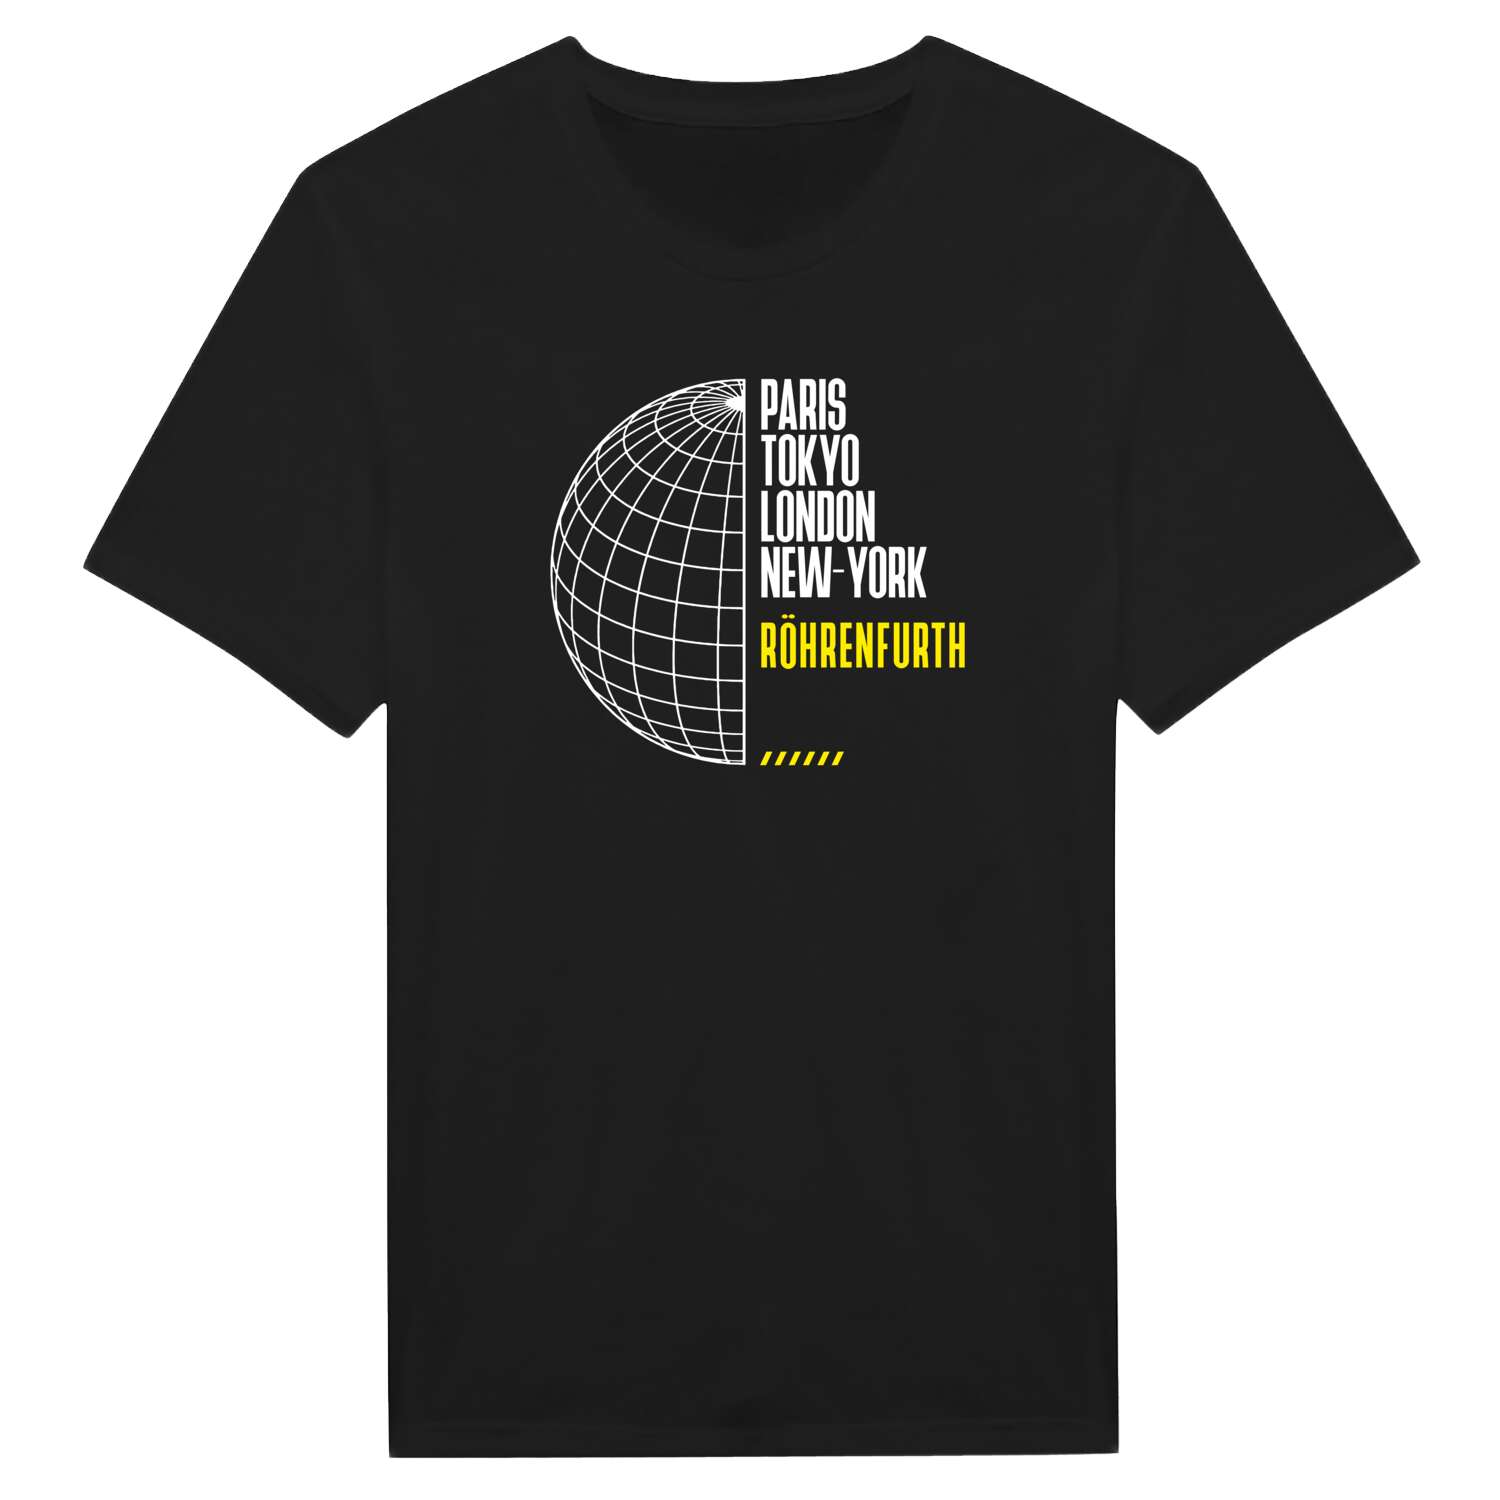 Röhrenfurth T-Shirt »Paris Tokyo London«